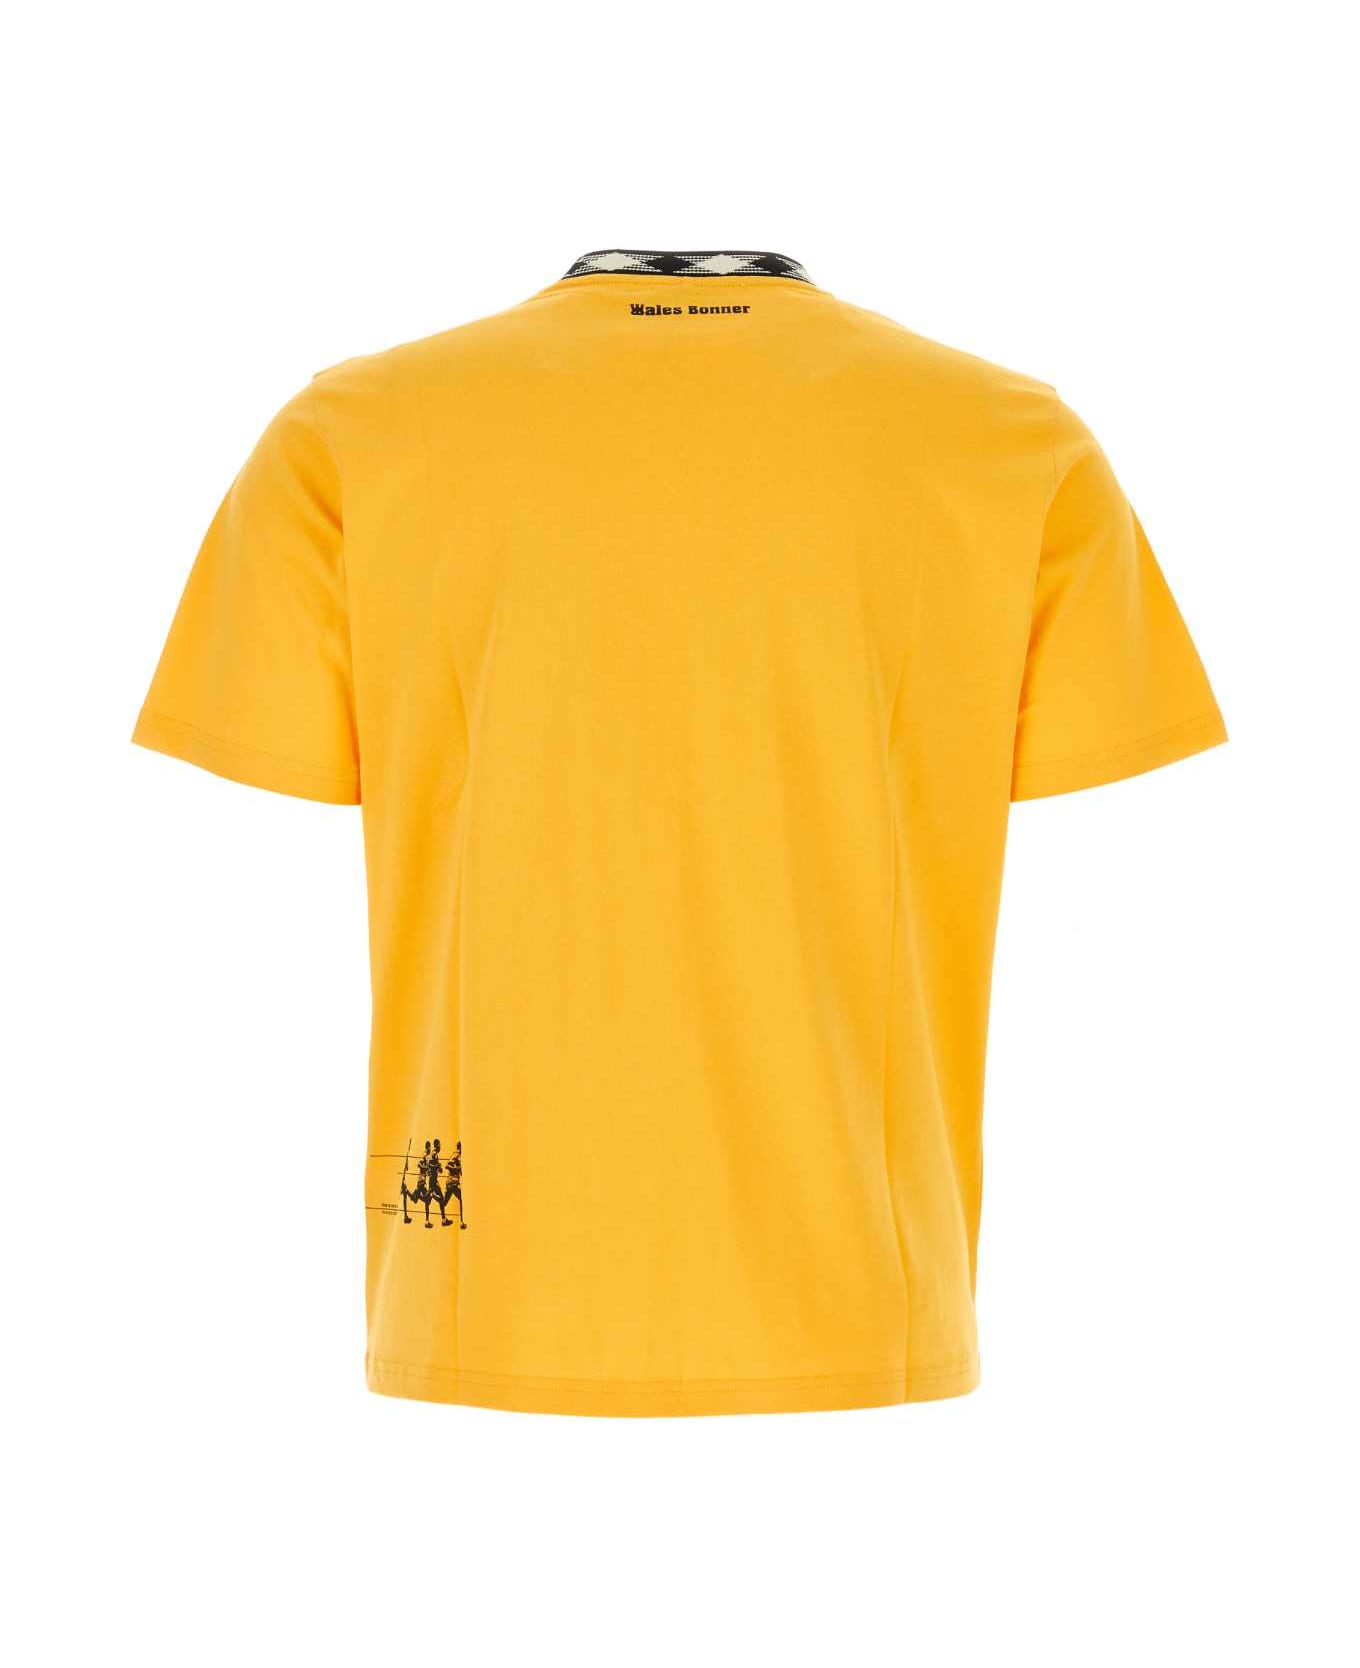 Wales Bonner Yellow Cotton Endurance T-shirt - TURMERIC